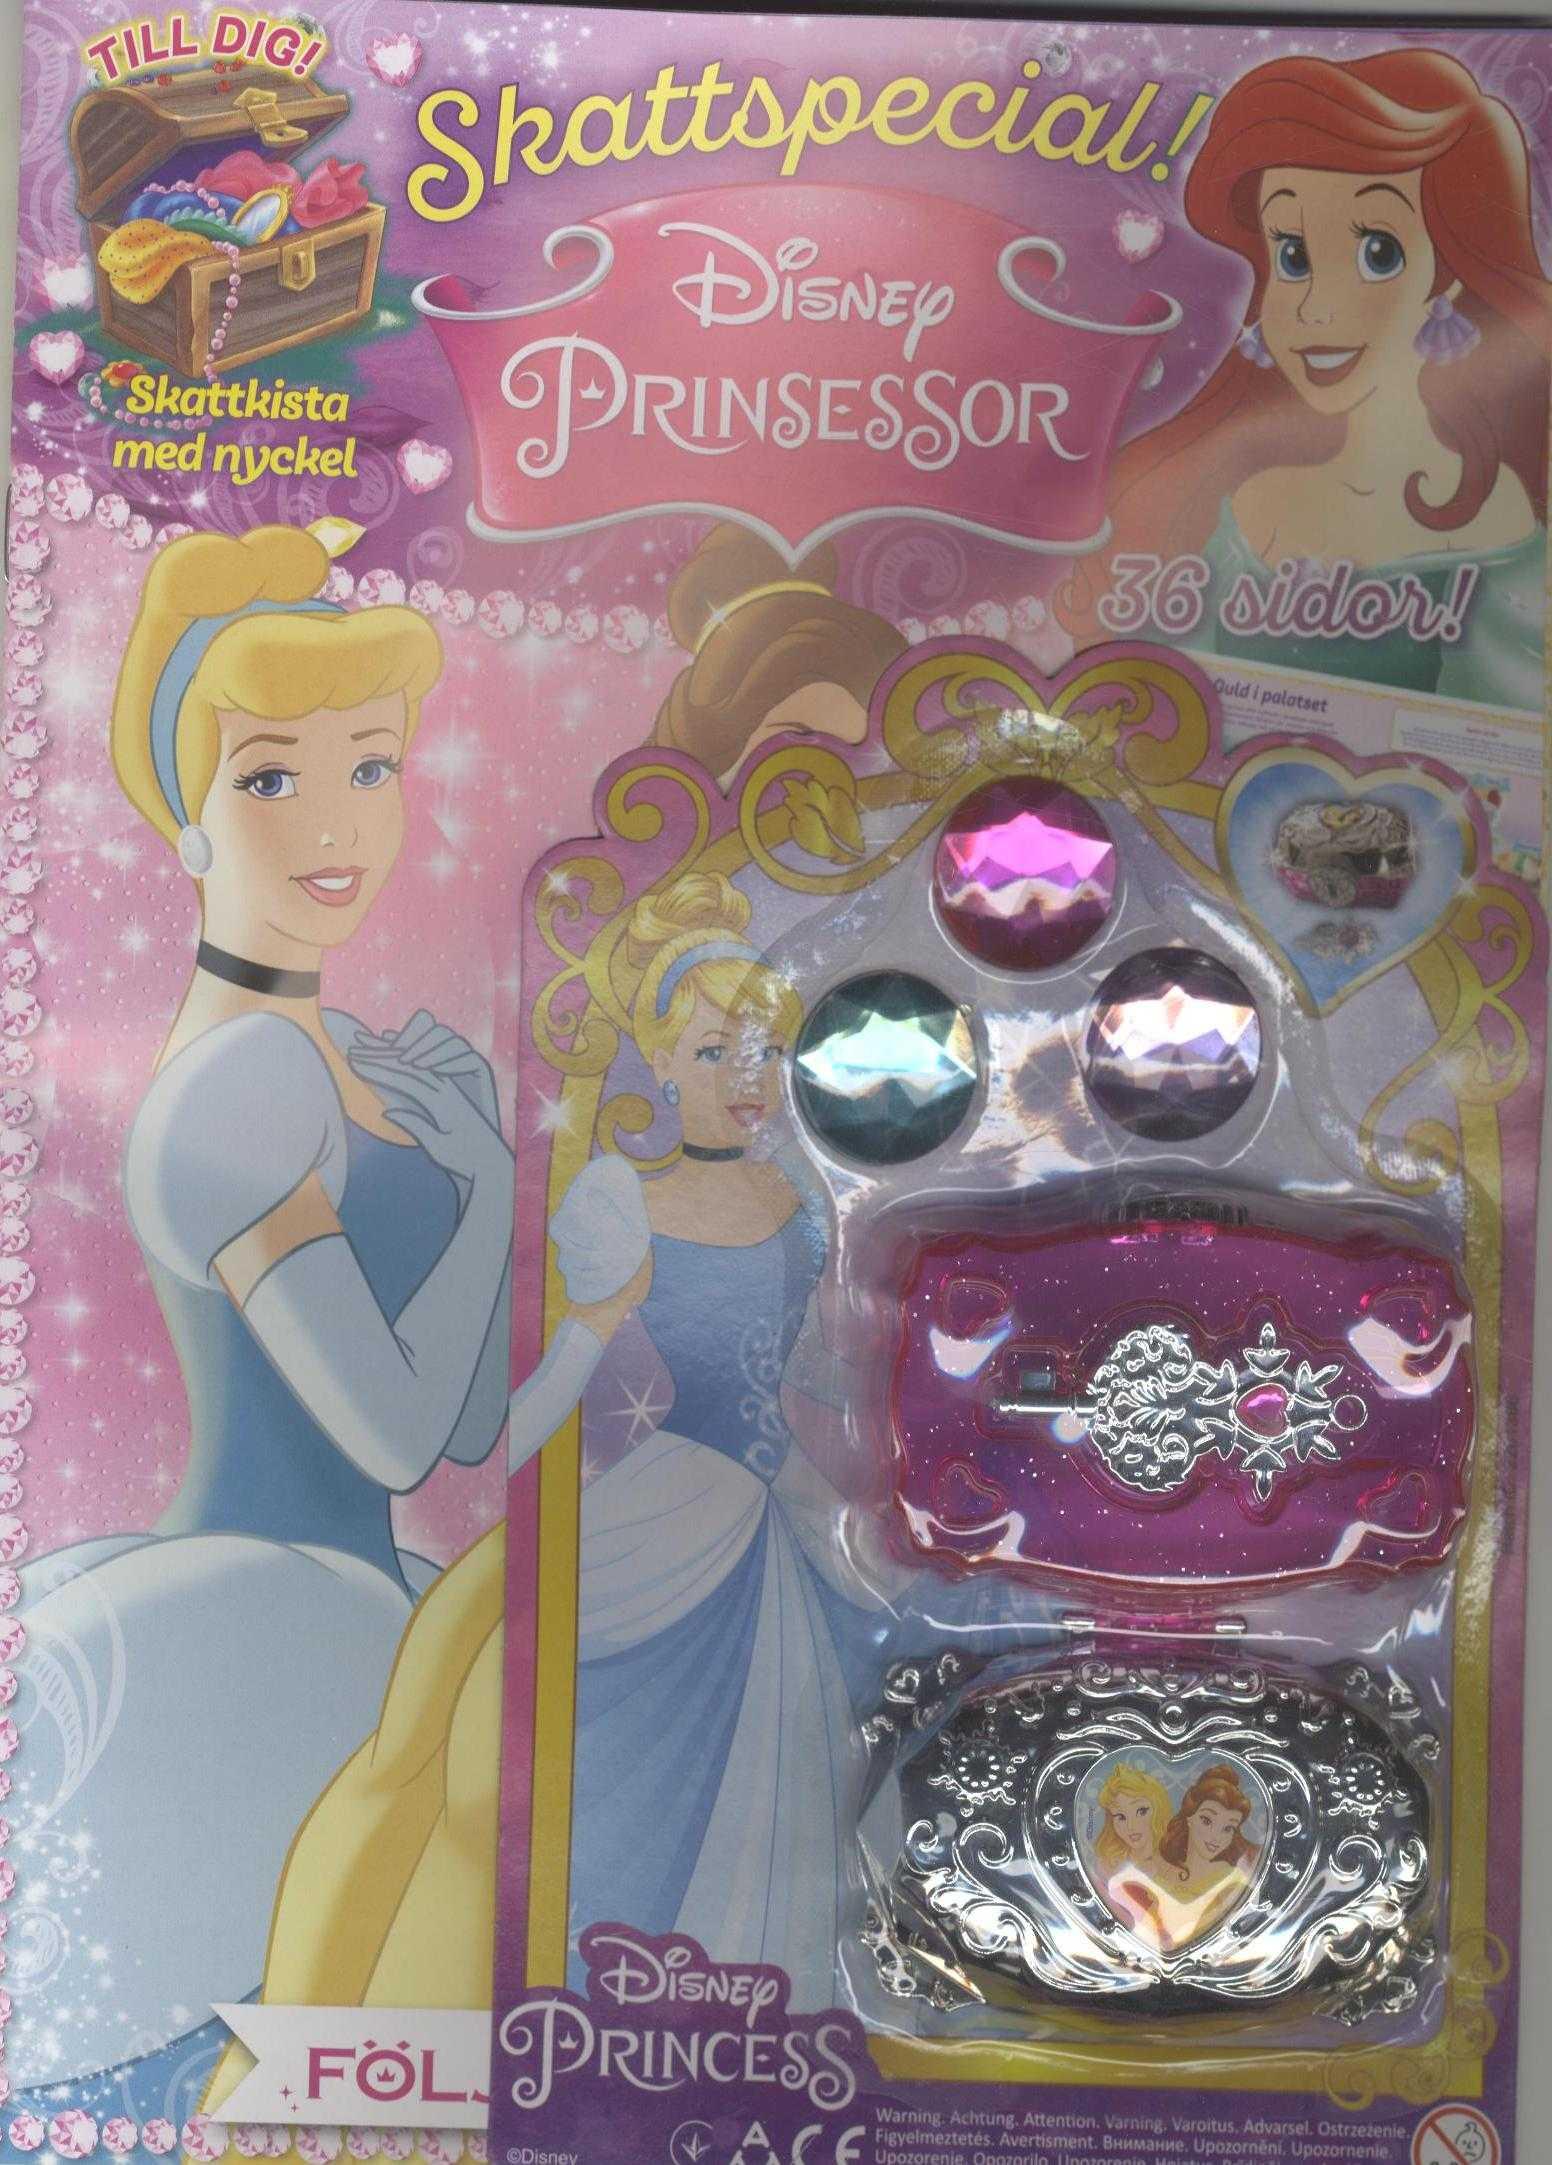 Disney Special Prinsessor